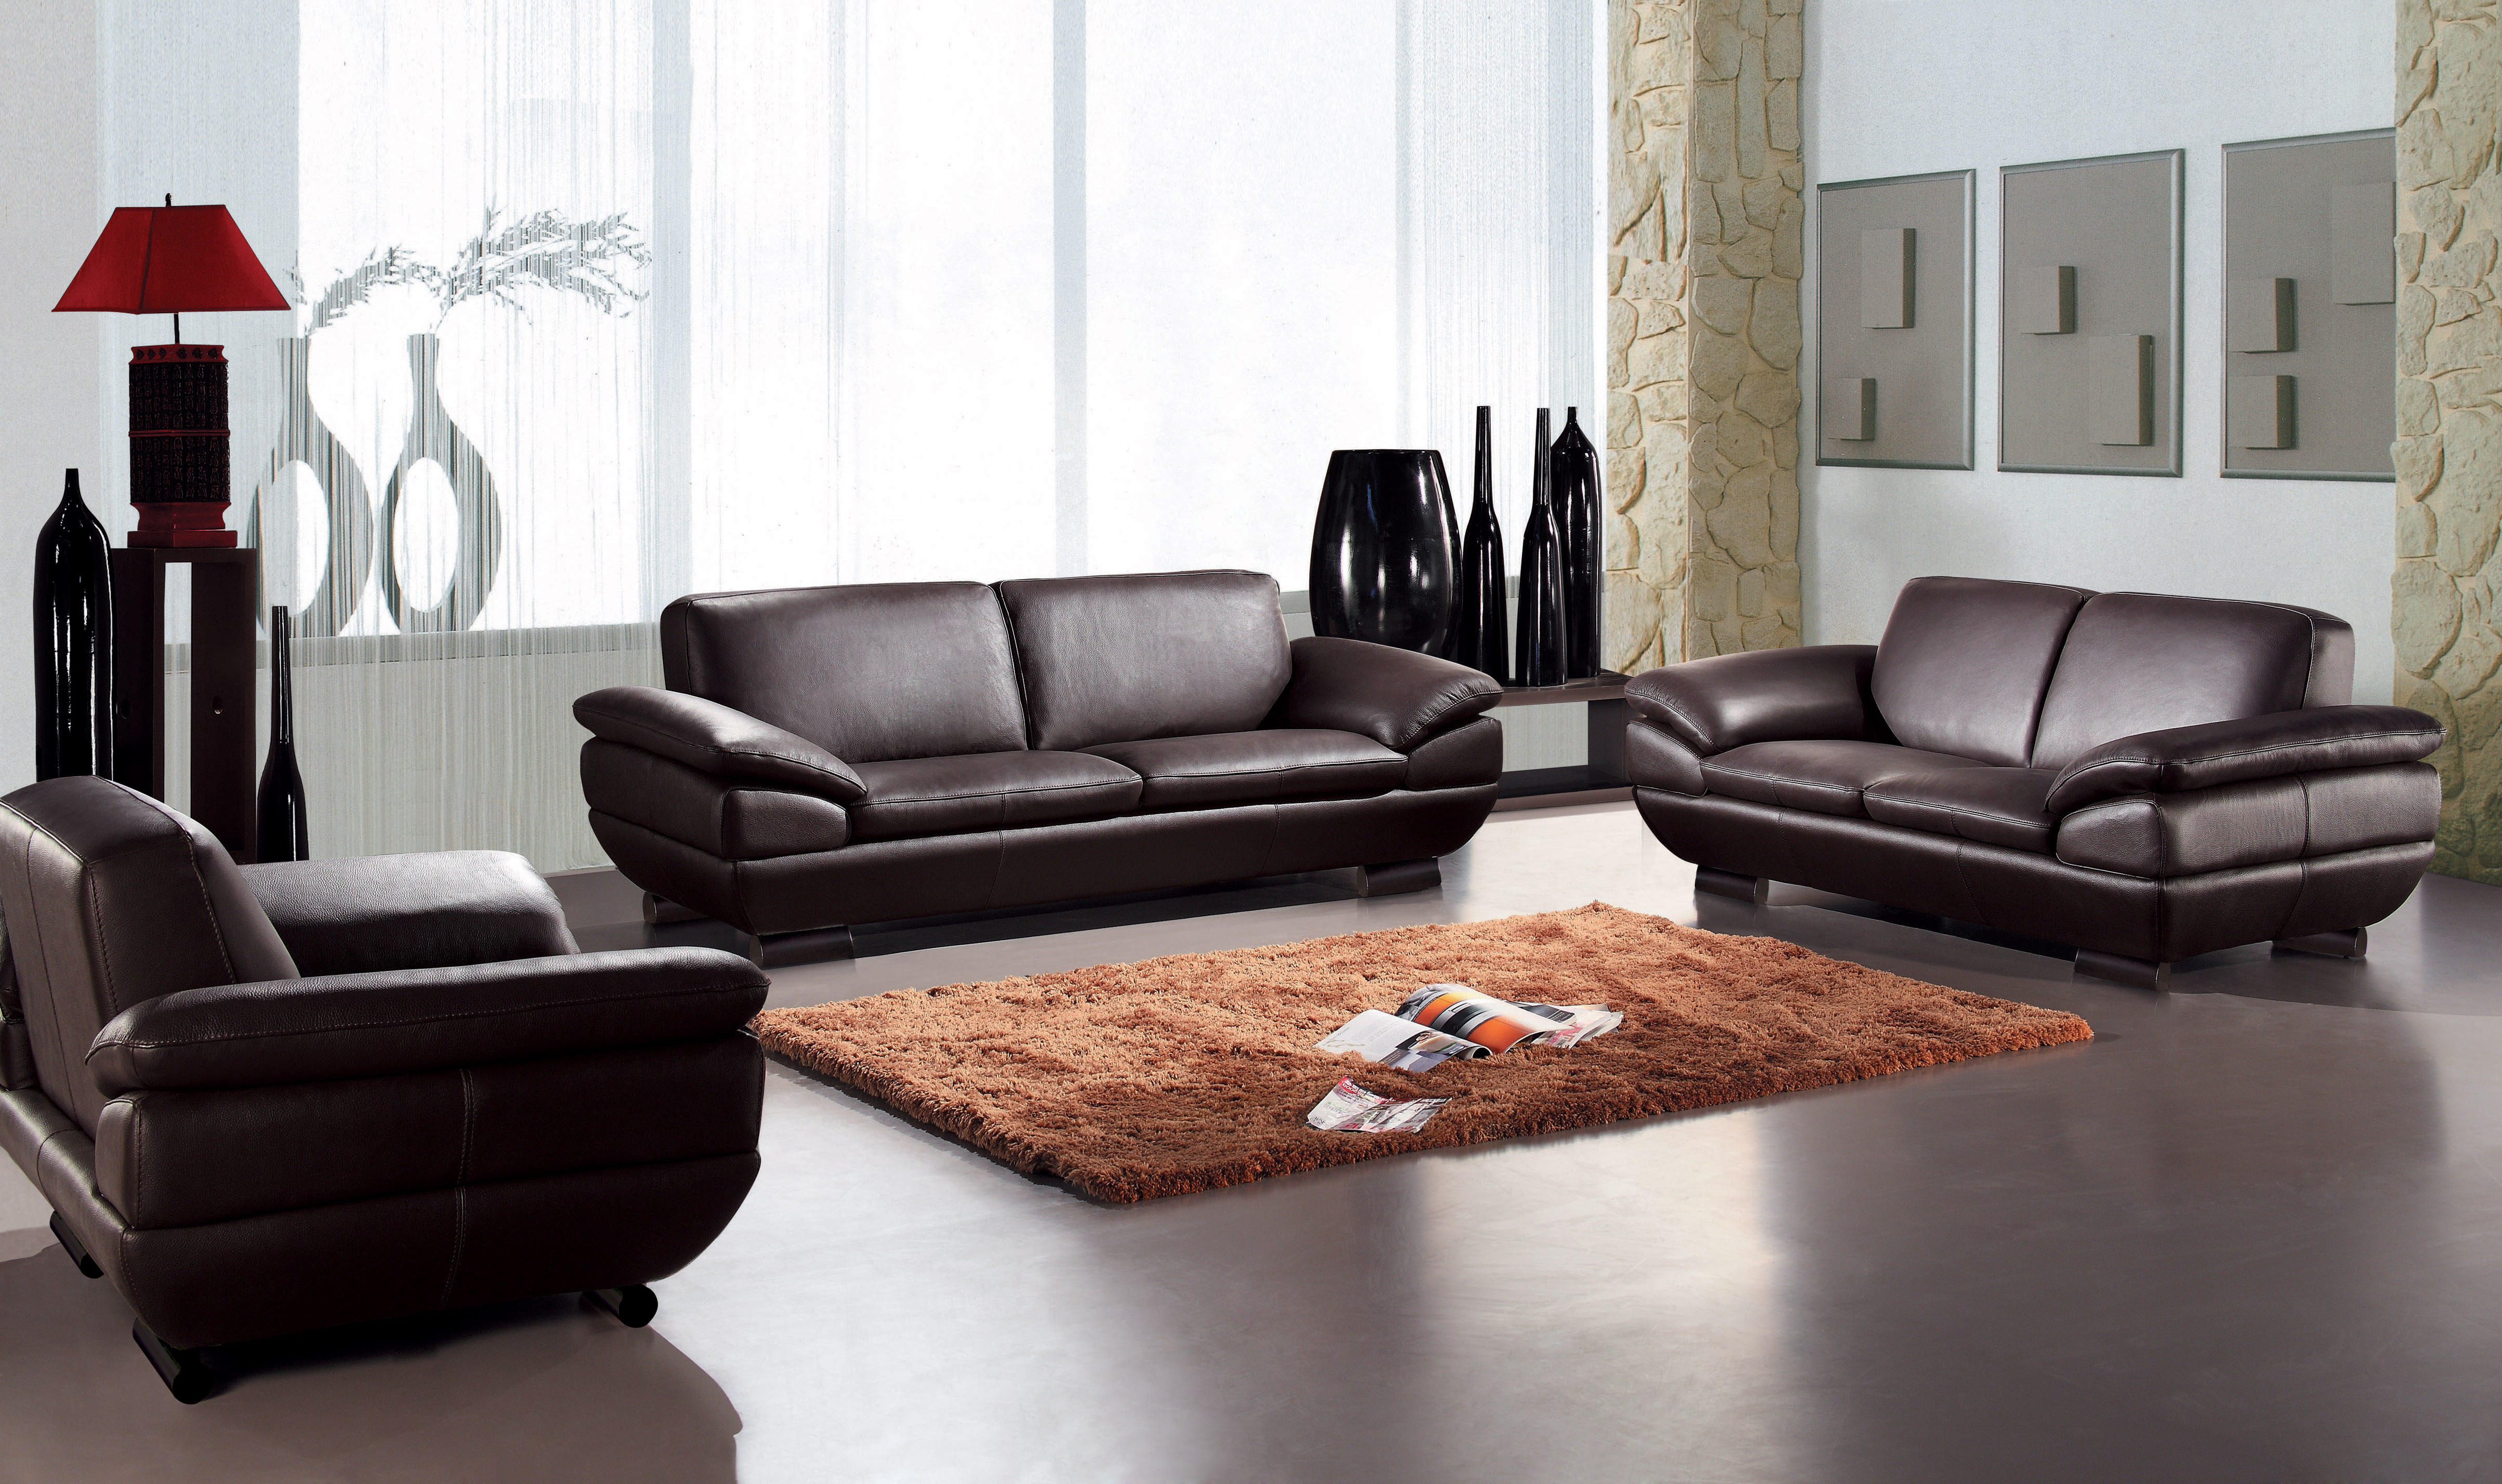 42+ 3 Piece Living Room Furniture Set For Sale Pictures | Homdesigns